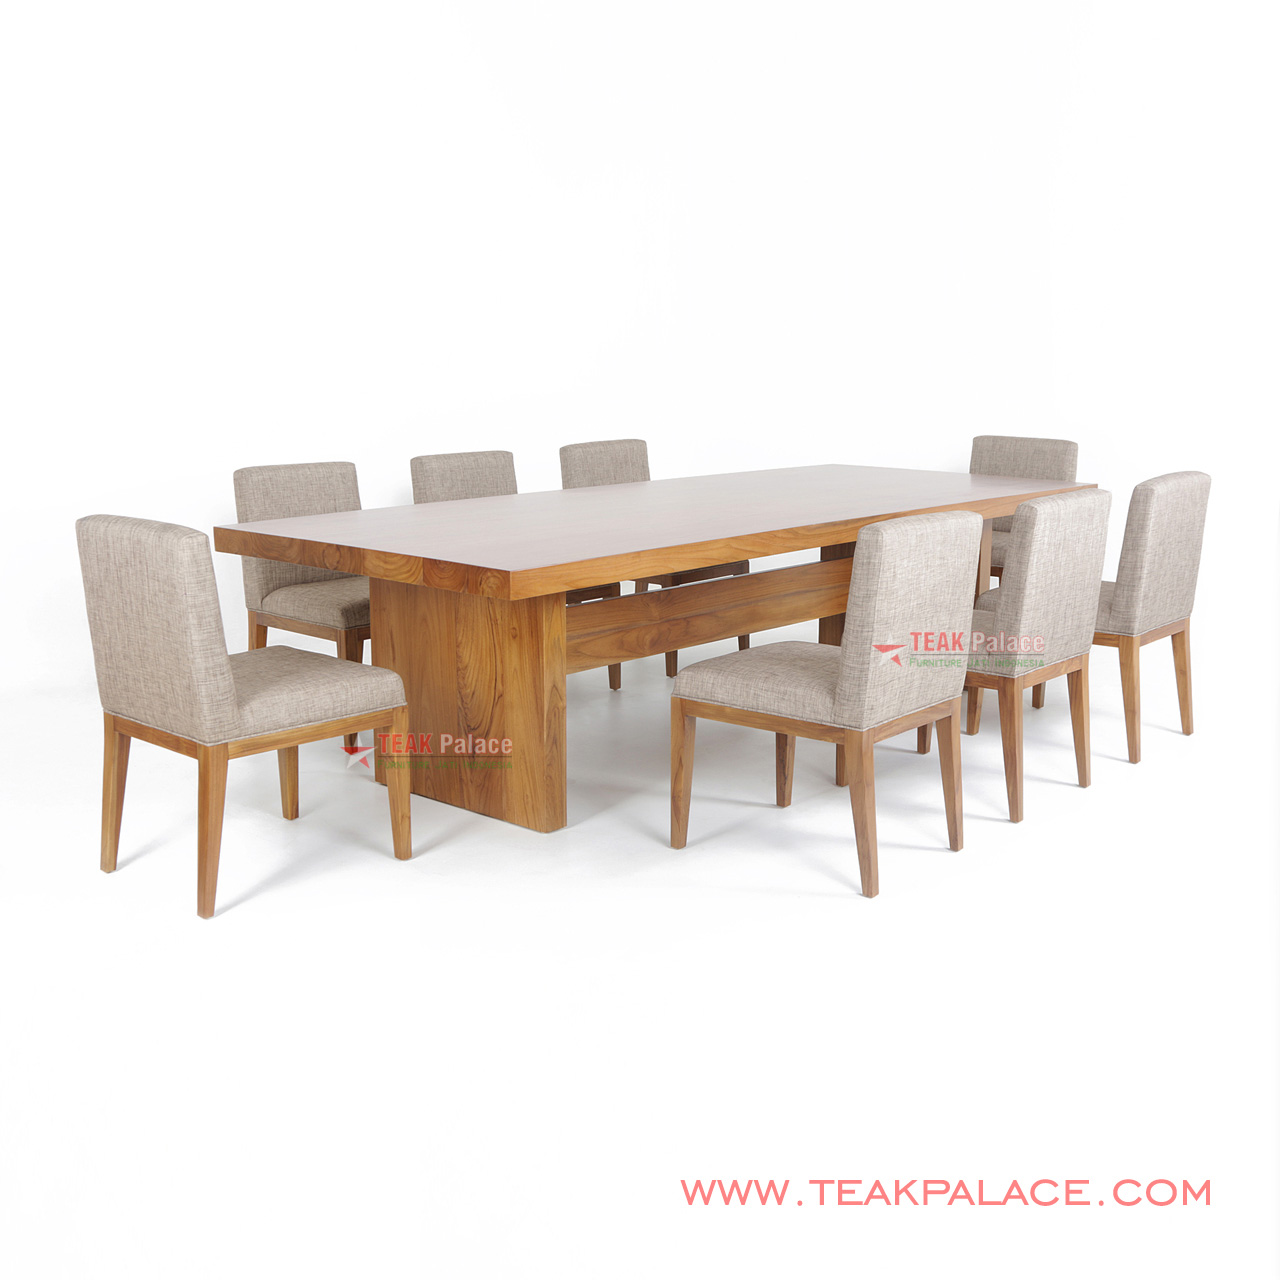 Aston Dining Table Set 8 Chair Teak Palace